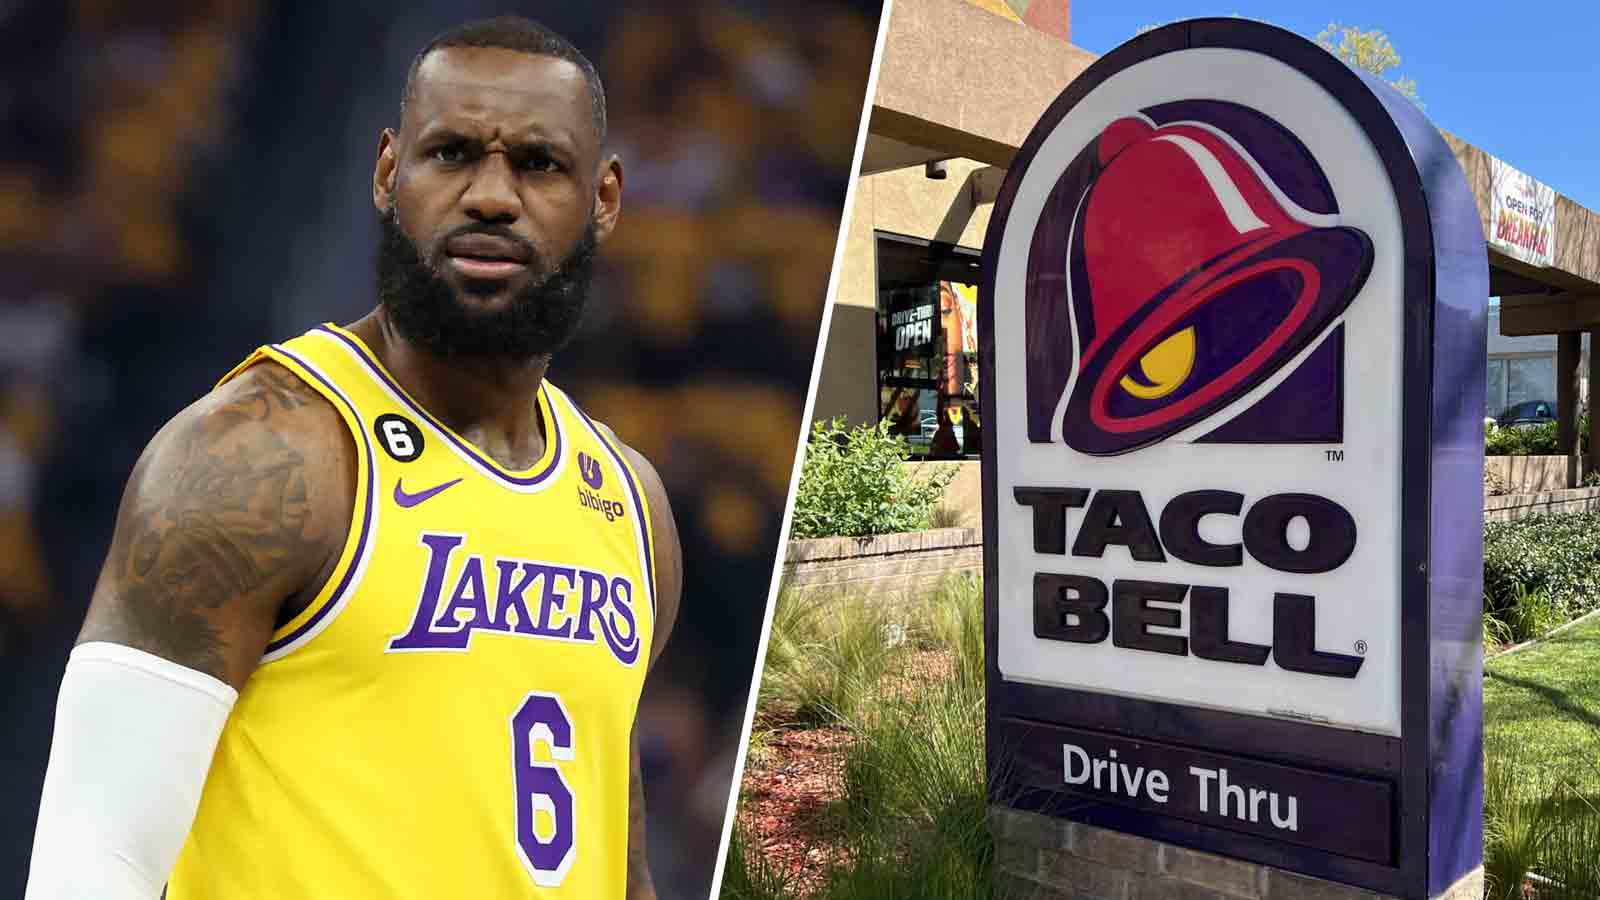 Taco Bell prevails as Taco John's abandons trademark to 'Taco